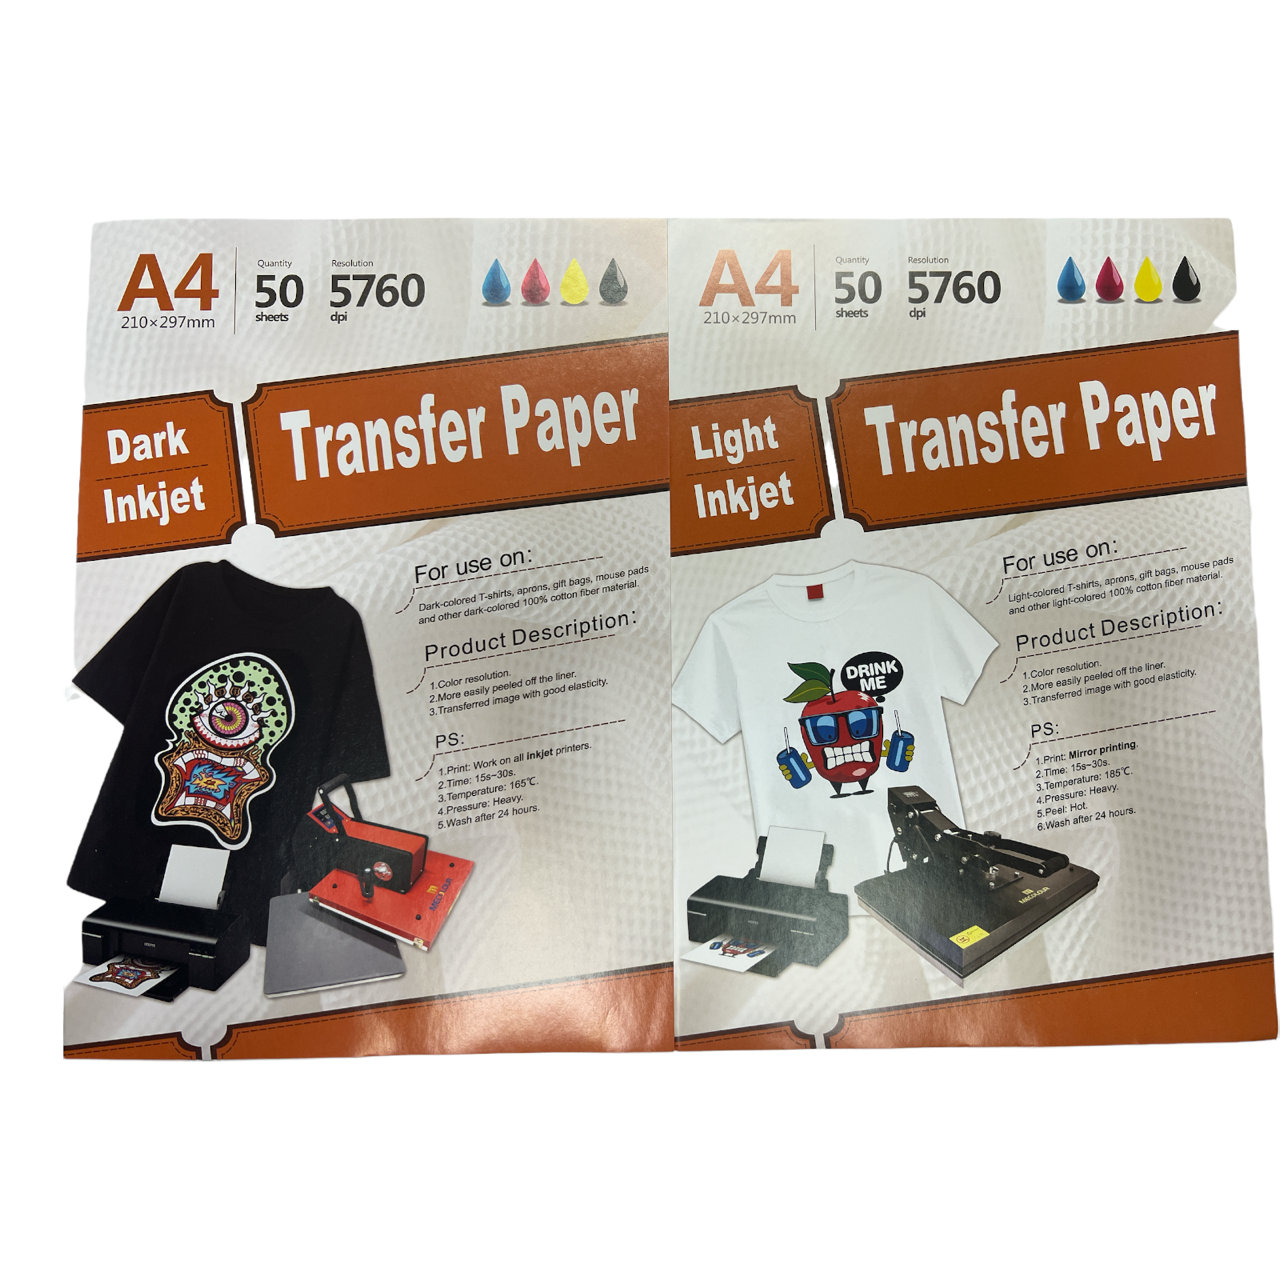 Printable Fabric Sheets for Inkjet Printers - National Artcraft